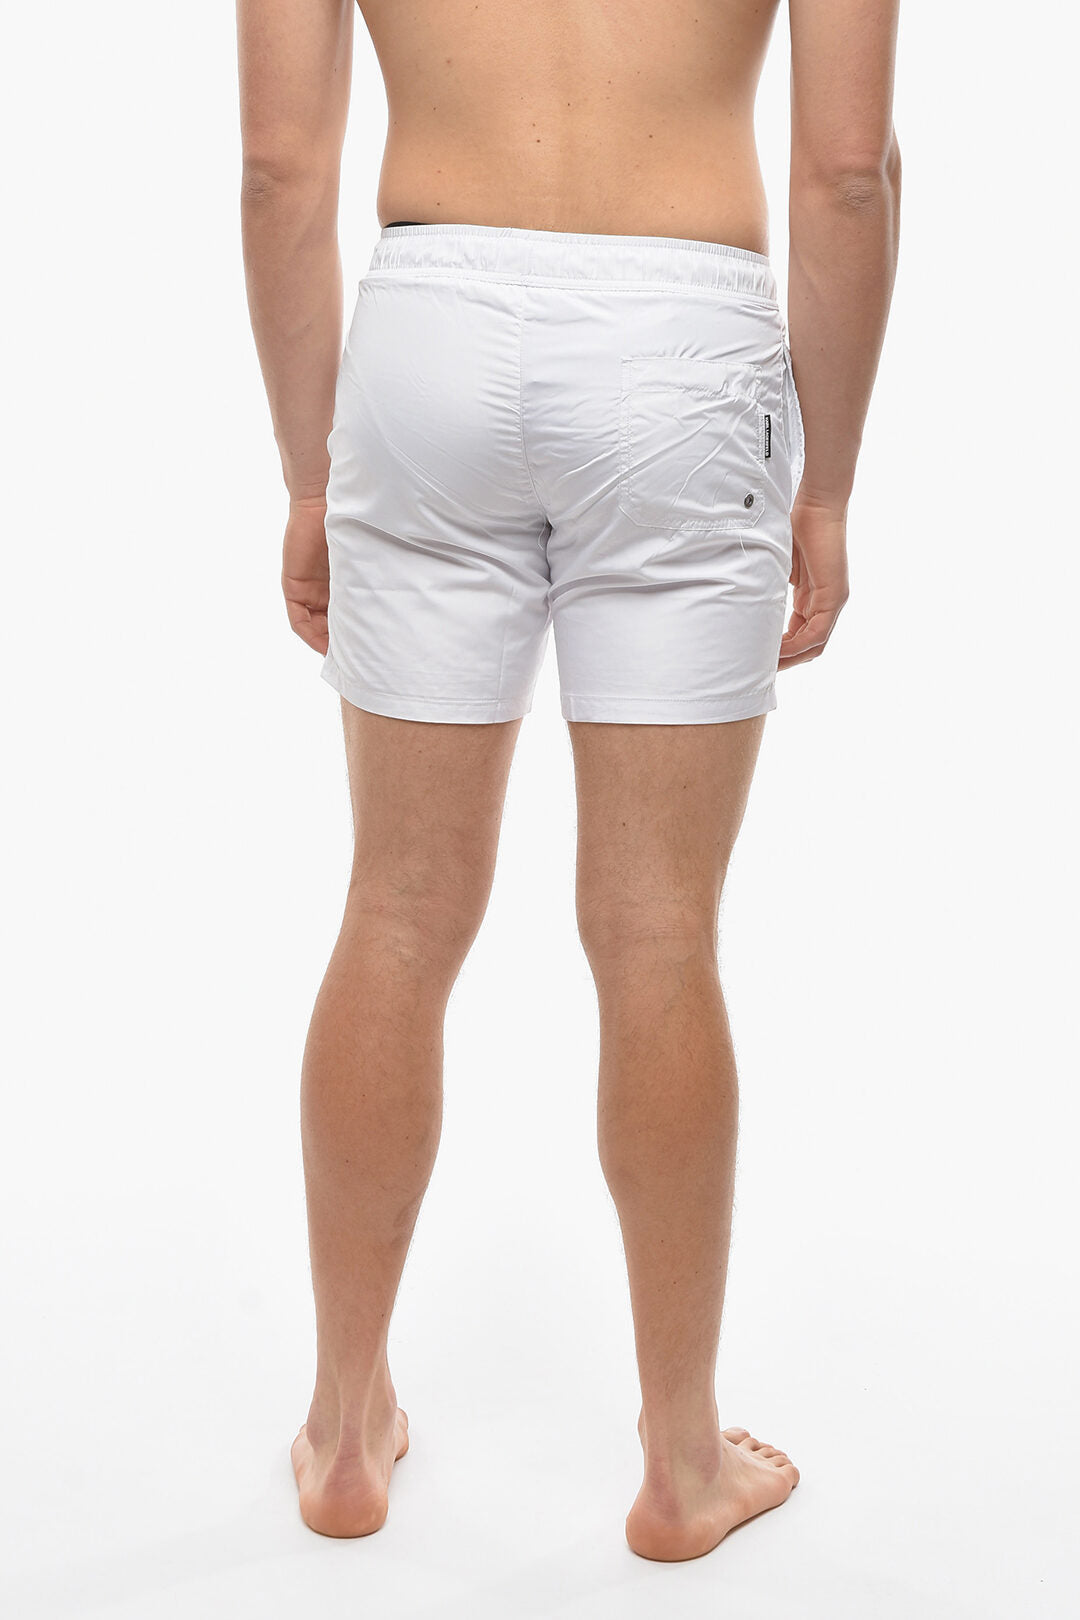 Rue st-guillaume basic plain boxer swimsuit with 3 pockets white